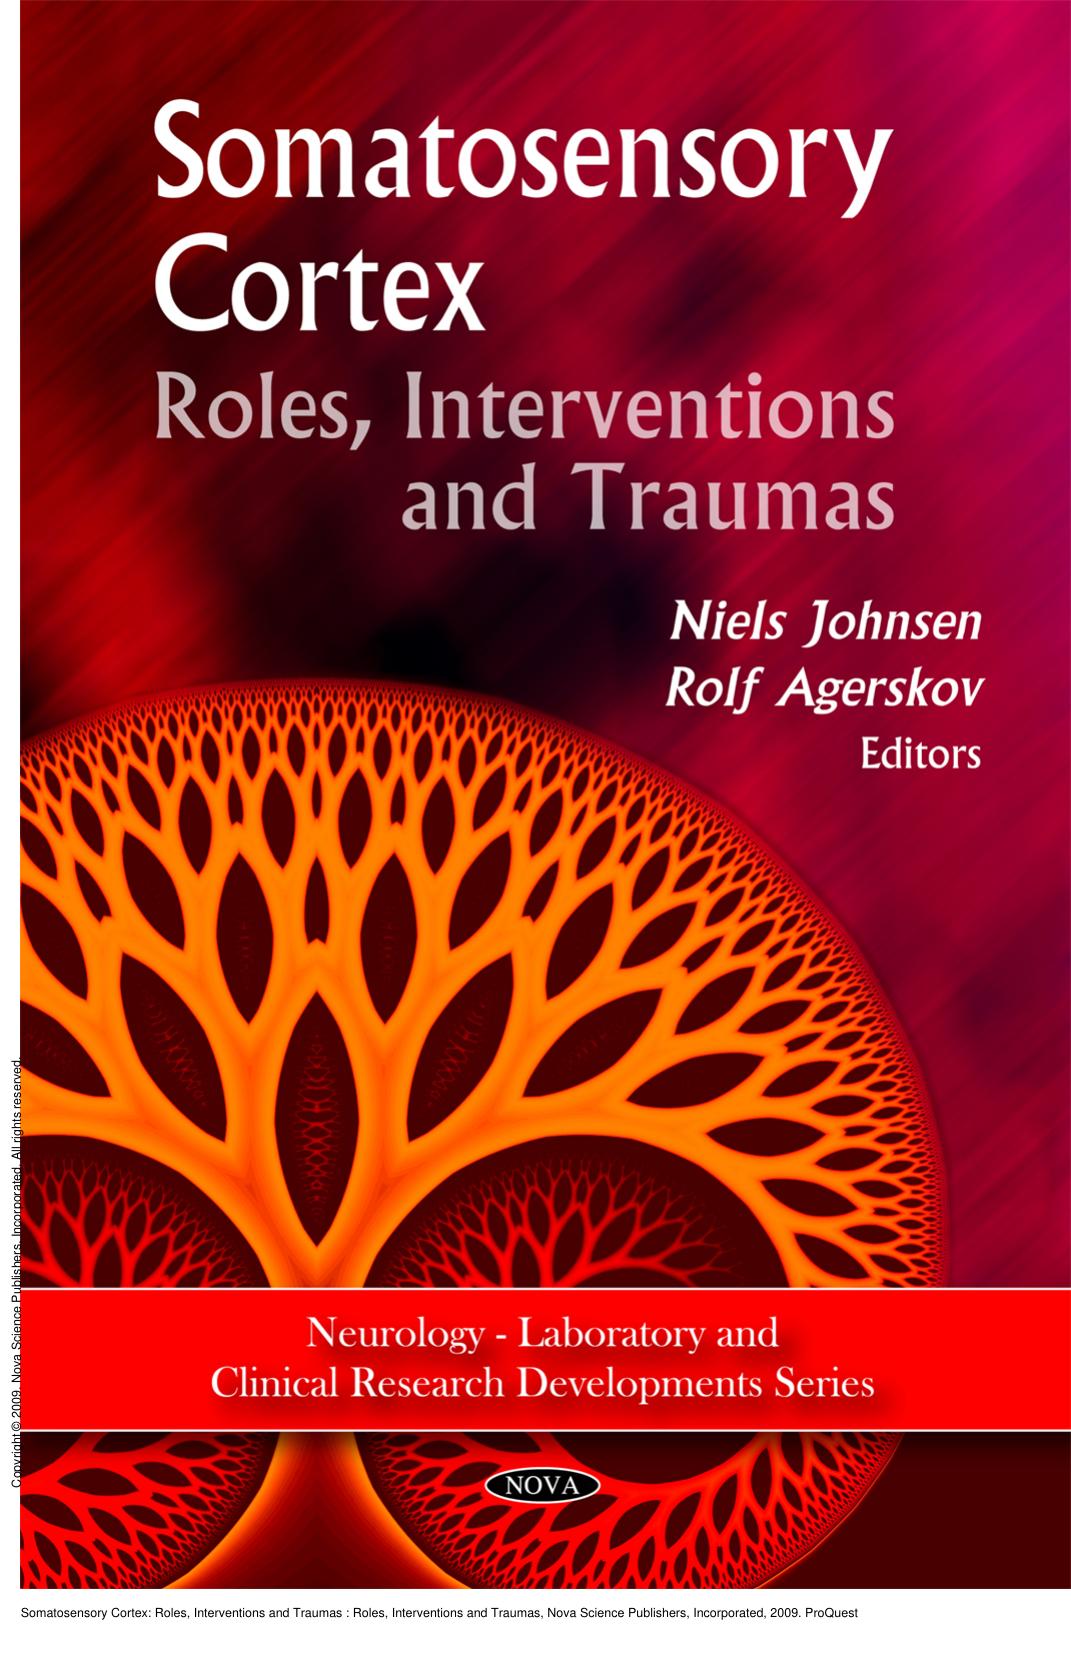 Somatosensory Cortex: Roles, Interventions and Traumas : Roles, Interventions and Traumas by Niels Johnsen; Rolf Agerskov